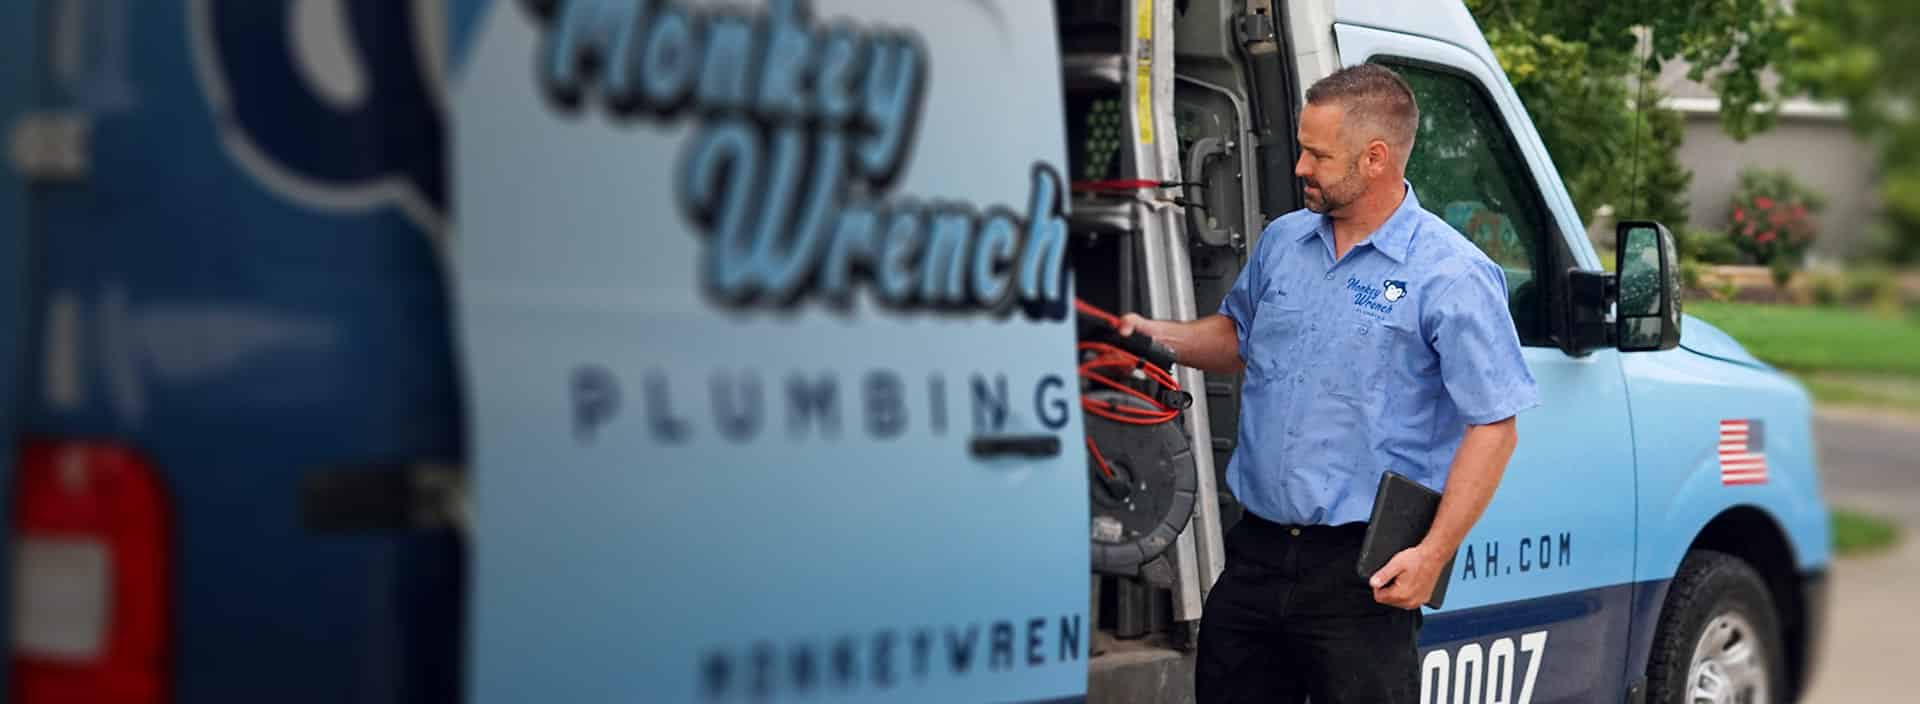 Plumbing maintenance West Jordan-plumbers in Salt Lake City